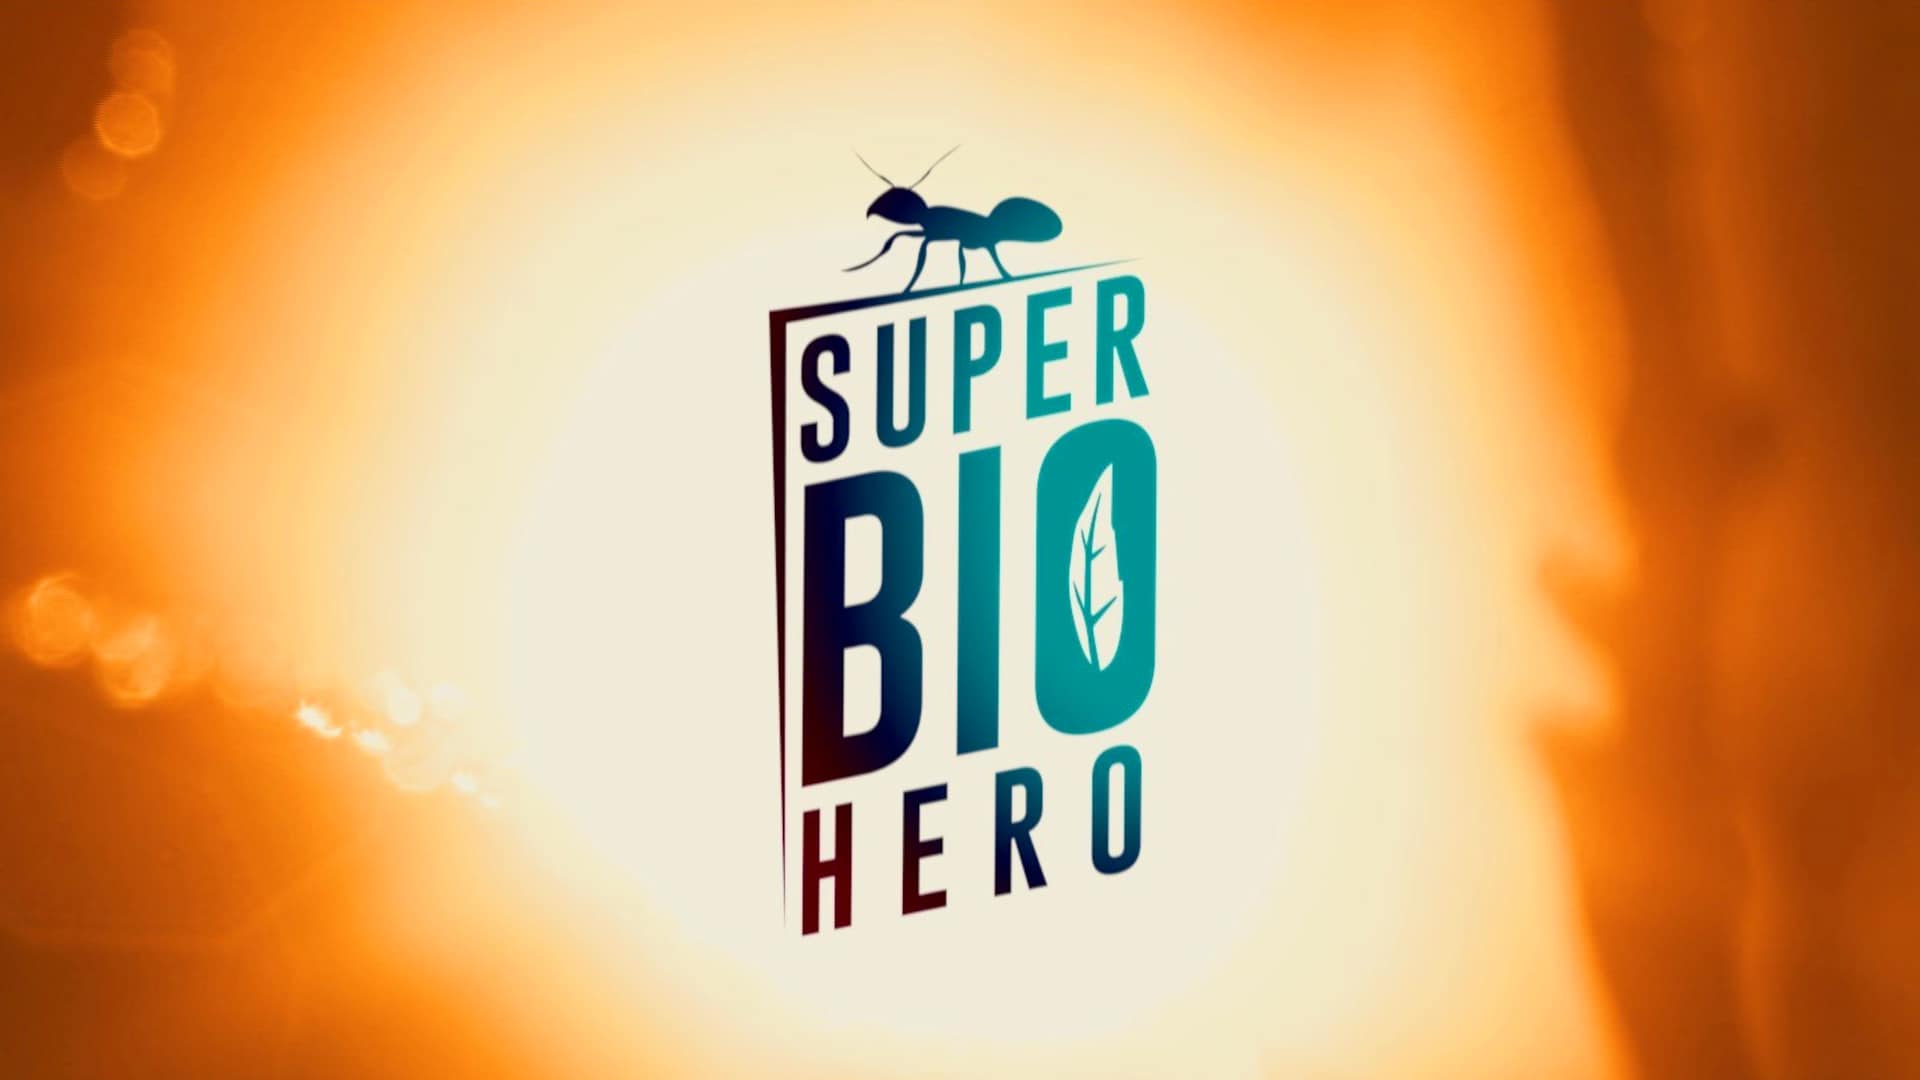 Super Bio Hero